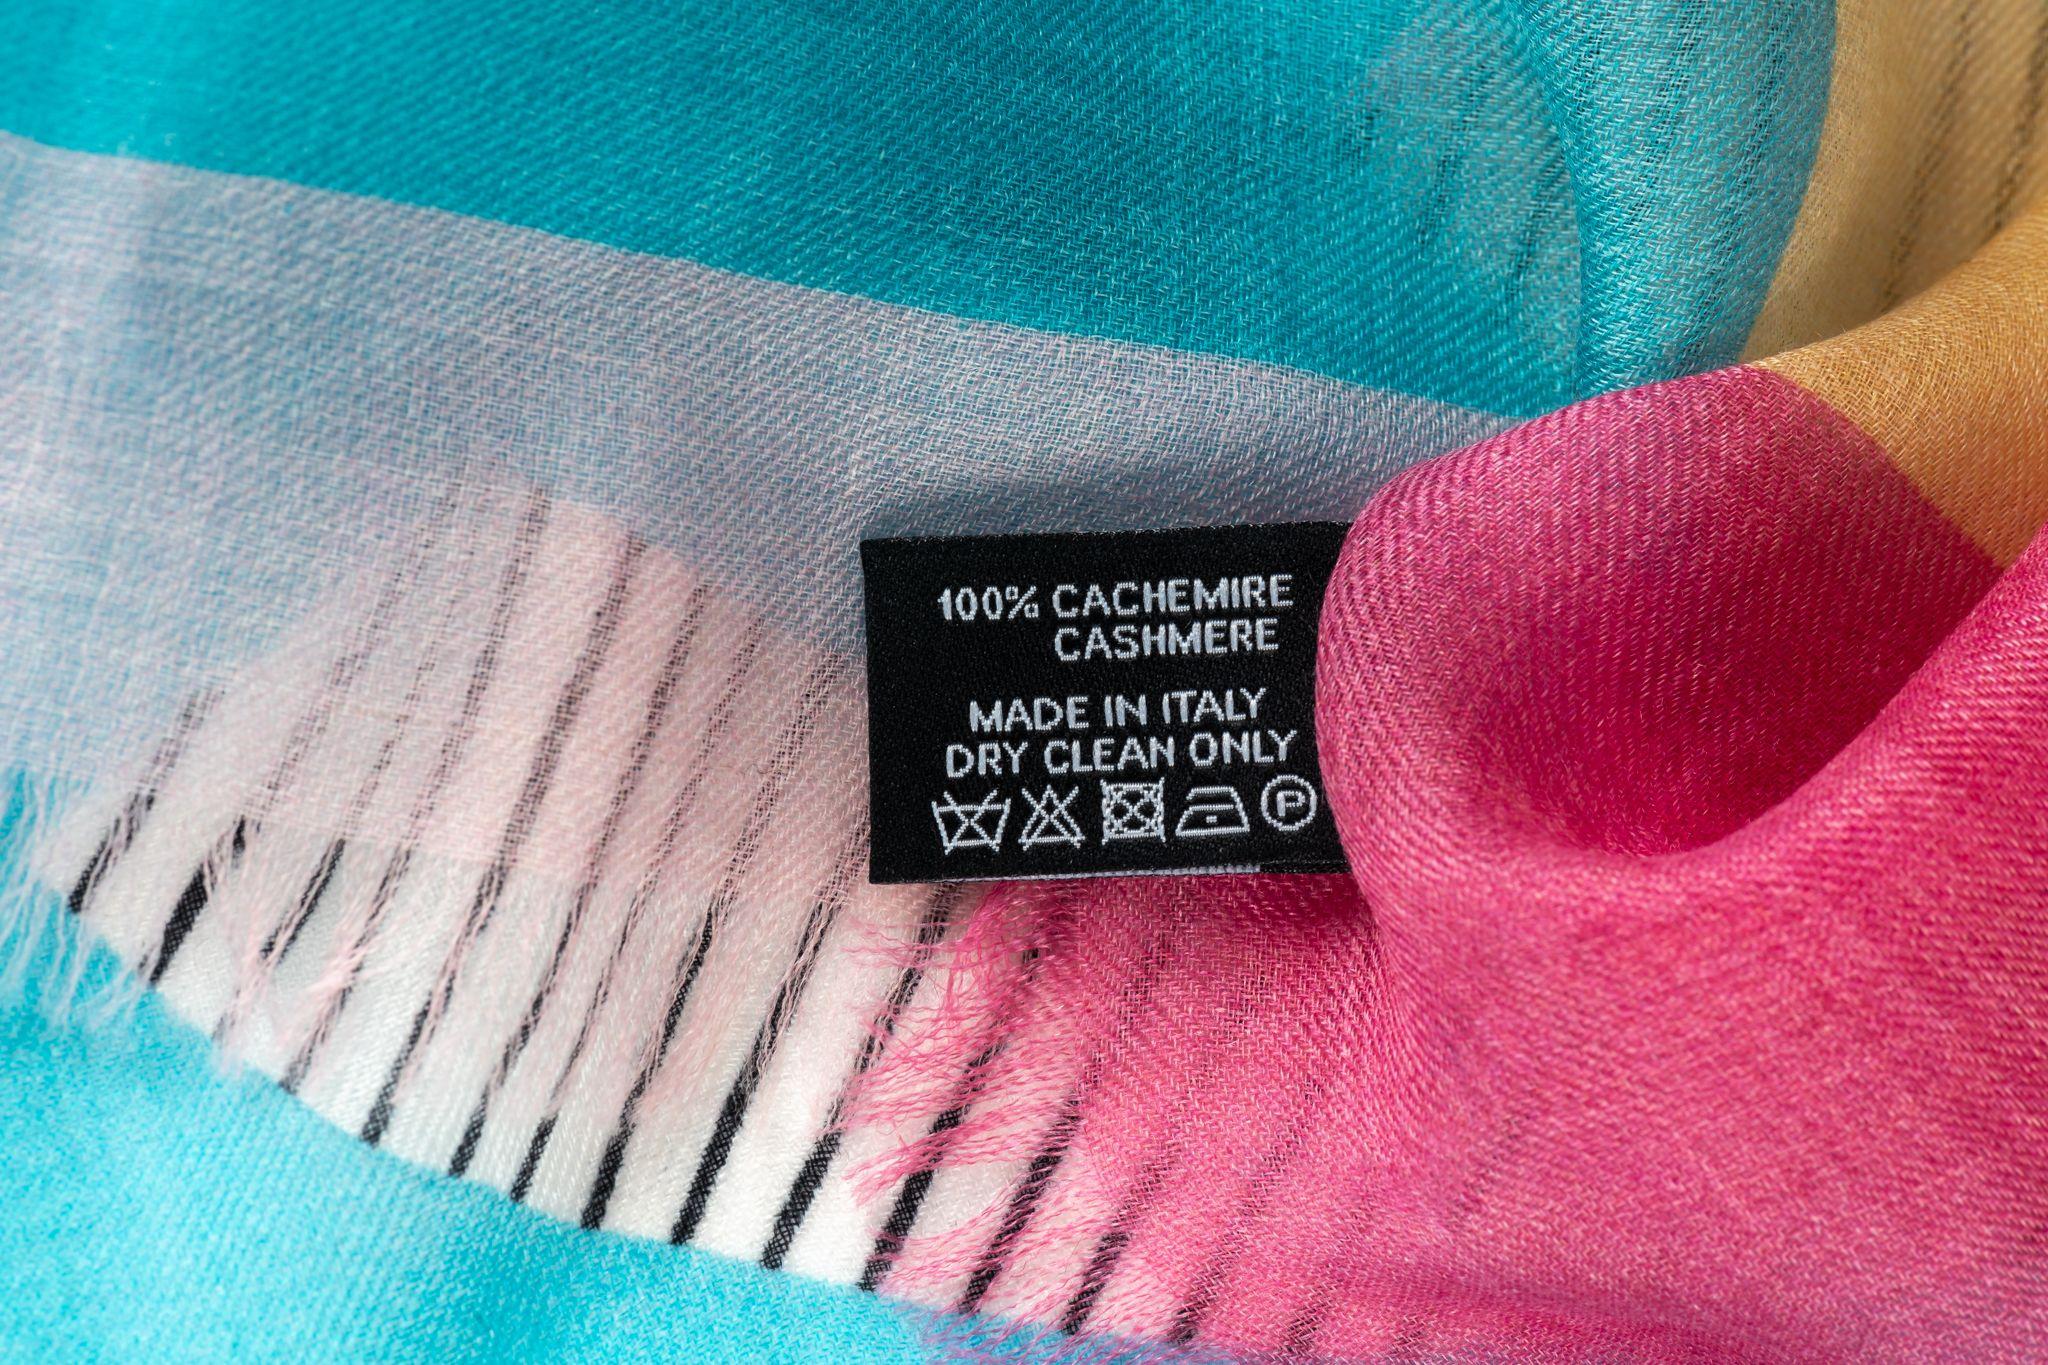 Chanel new checkers cashmere shawl. Multicolor combination. Care tag attached